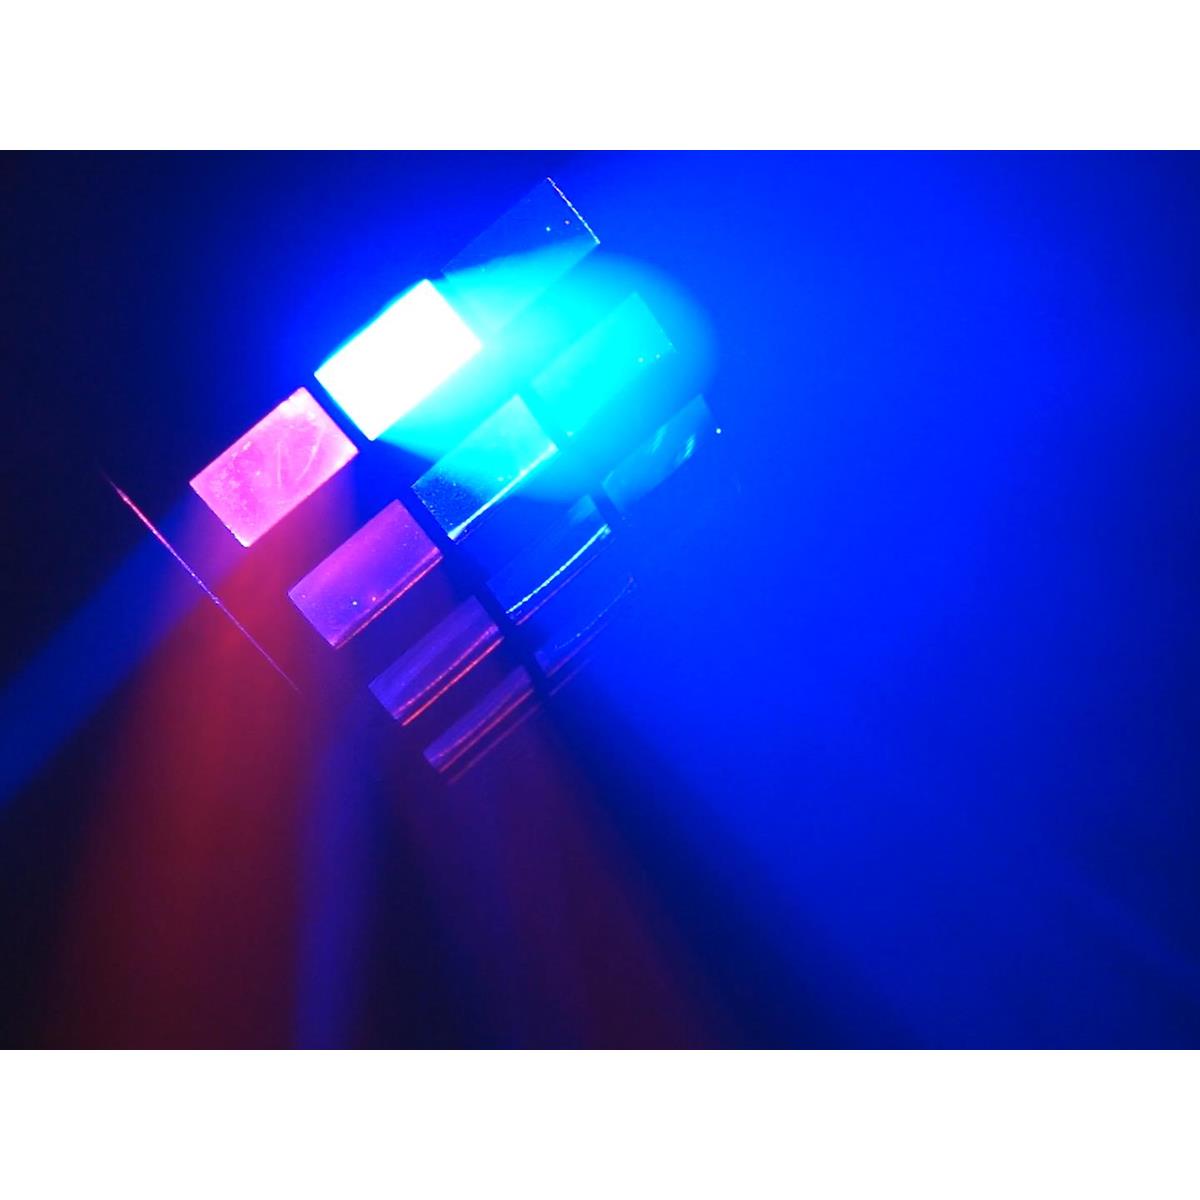 LED Strahleneffekt - kompakt und "party-ready" - 5 Farben, musikgesteuerte Beamshow